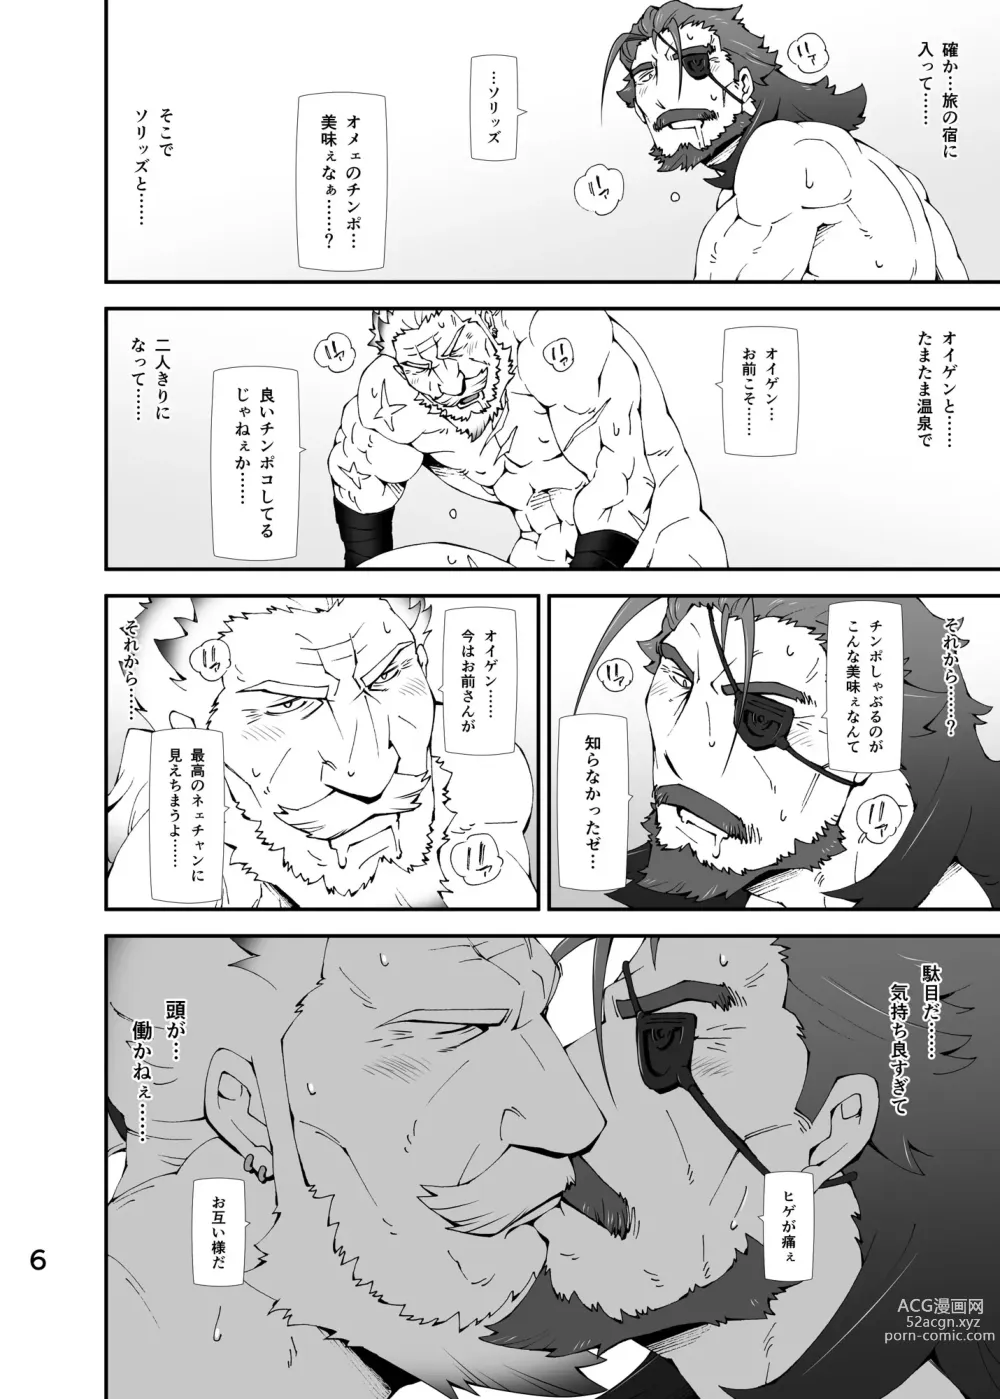 Page 5 of doujinshi GOOD LOVE-RU DARKNESS